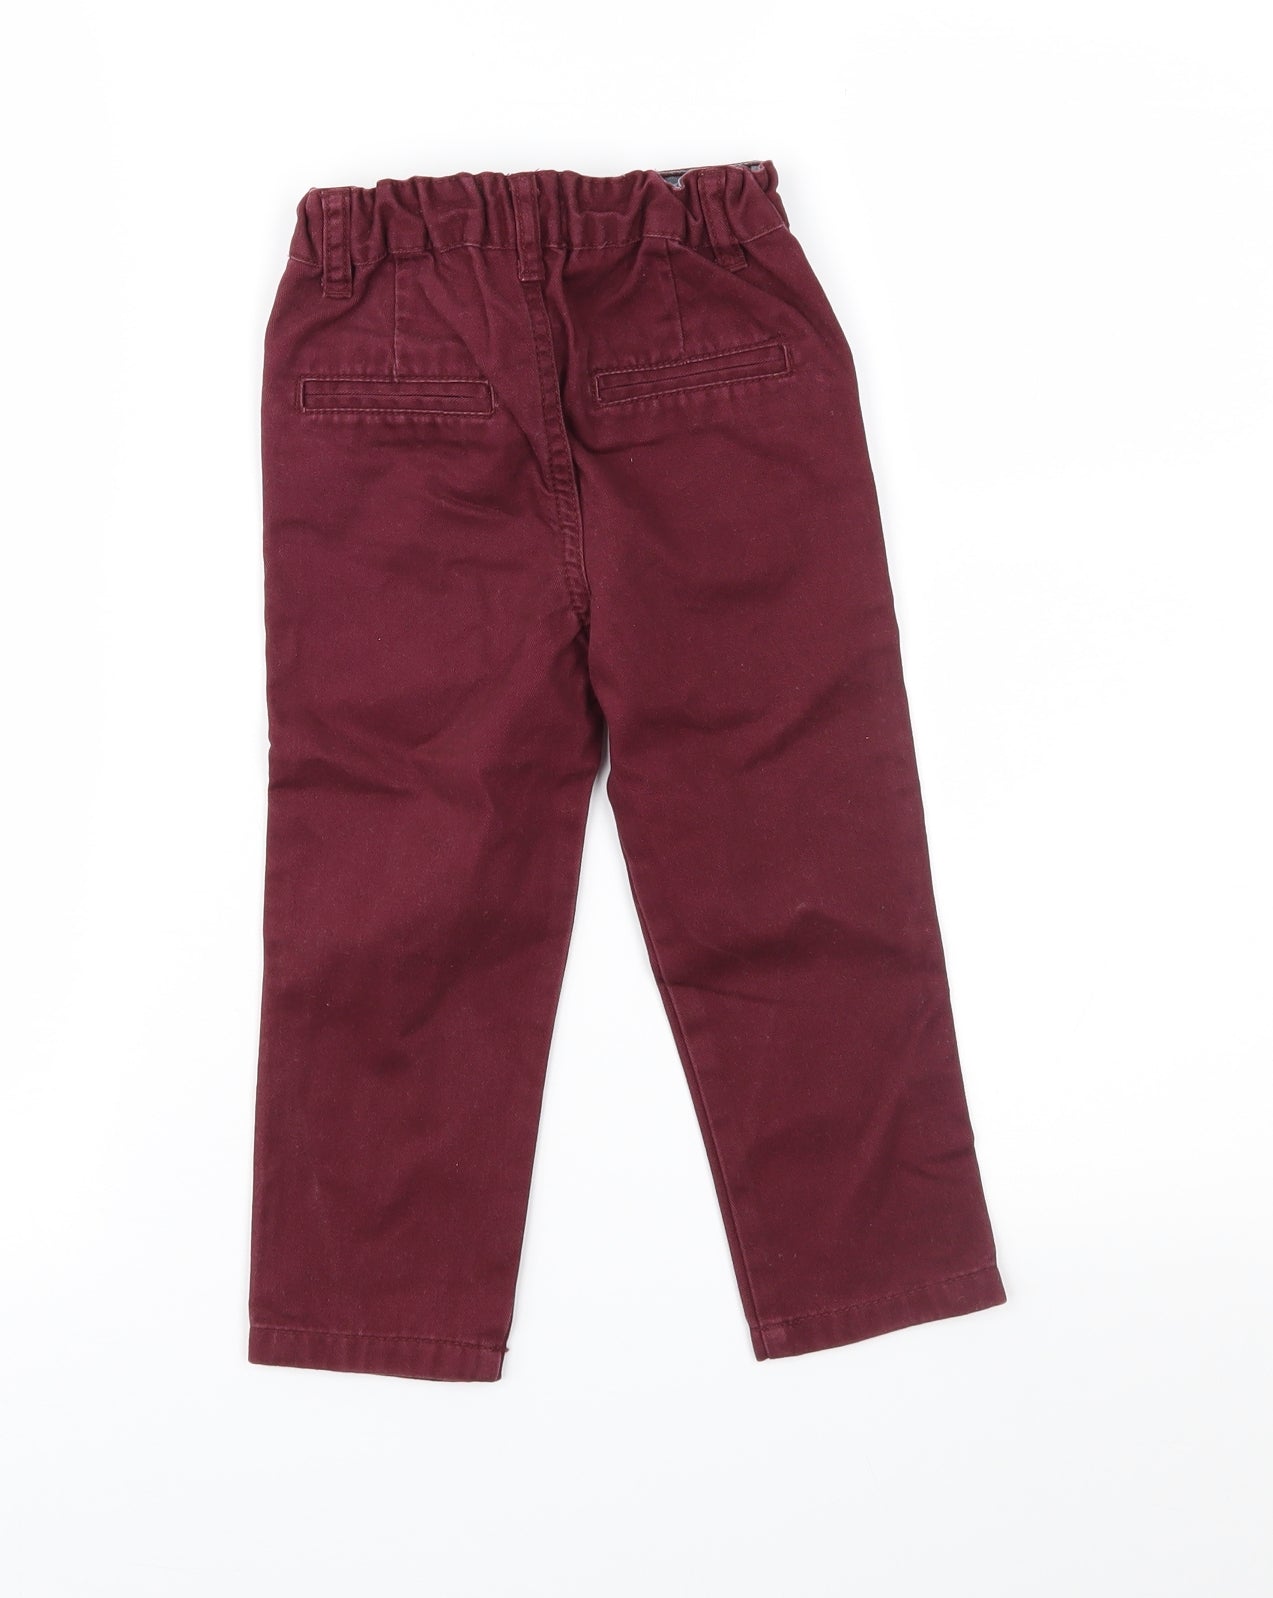 Denim & Co. Boys Red  Denim Straight Jeans Size 2-3 Years